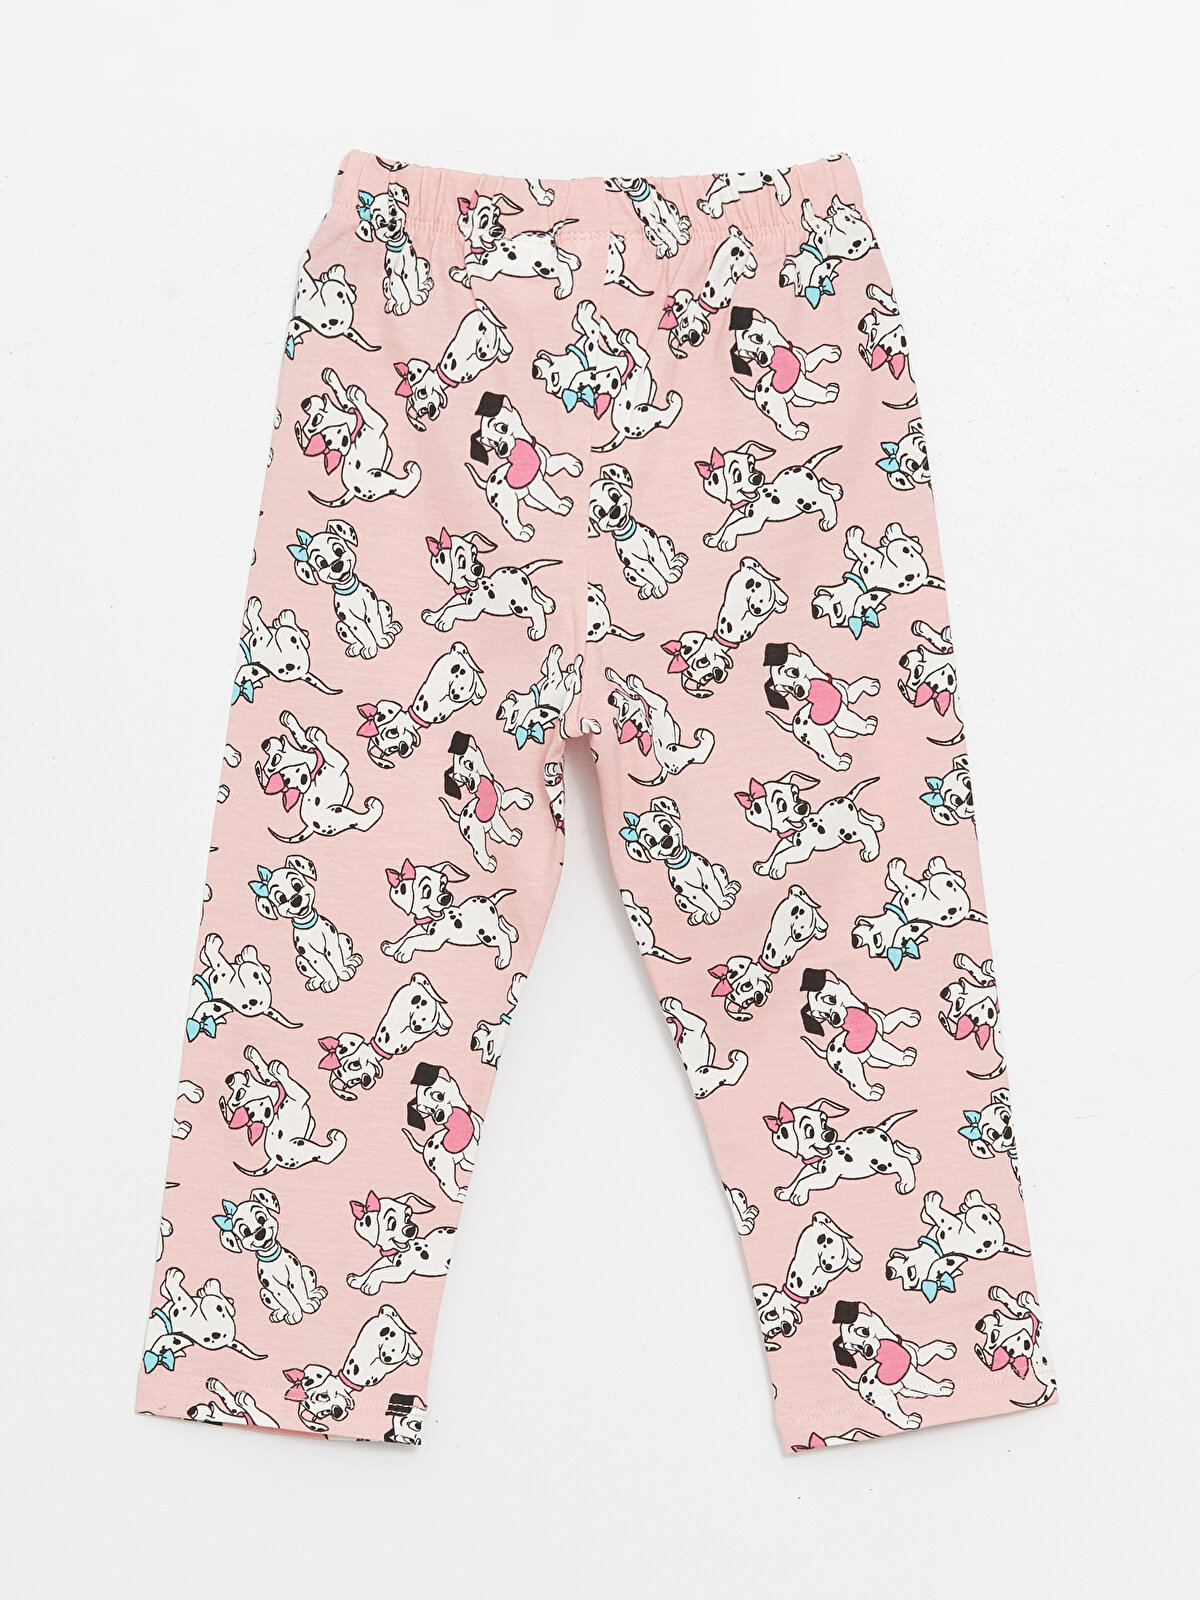 Polo Neck Long Sleeve 101 Dalmatians Printed Baby Girl Pajama Set 